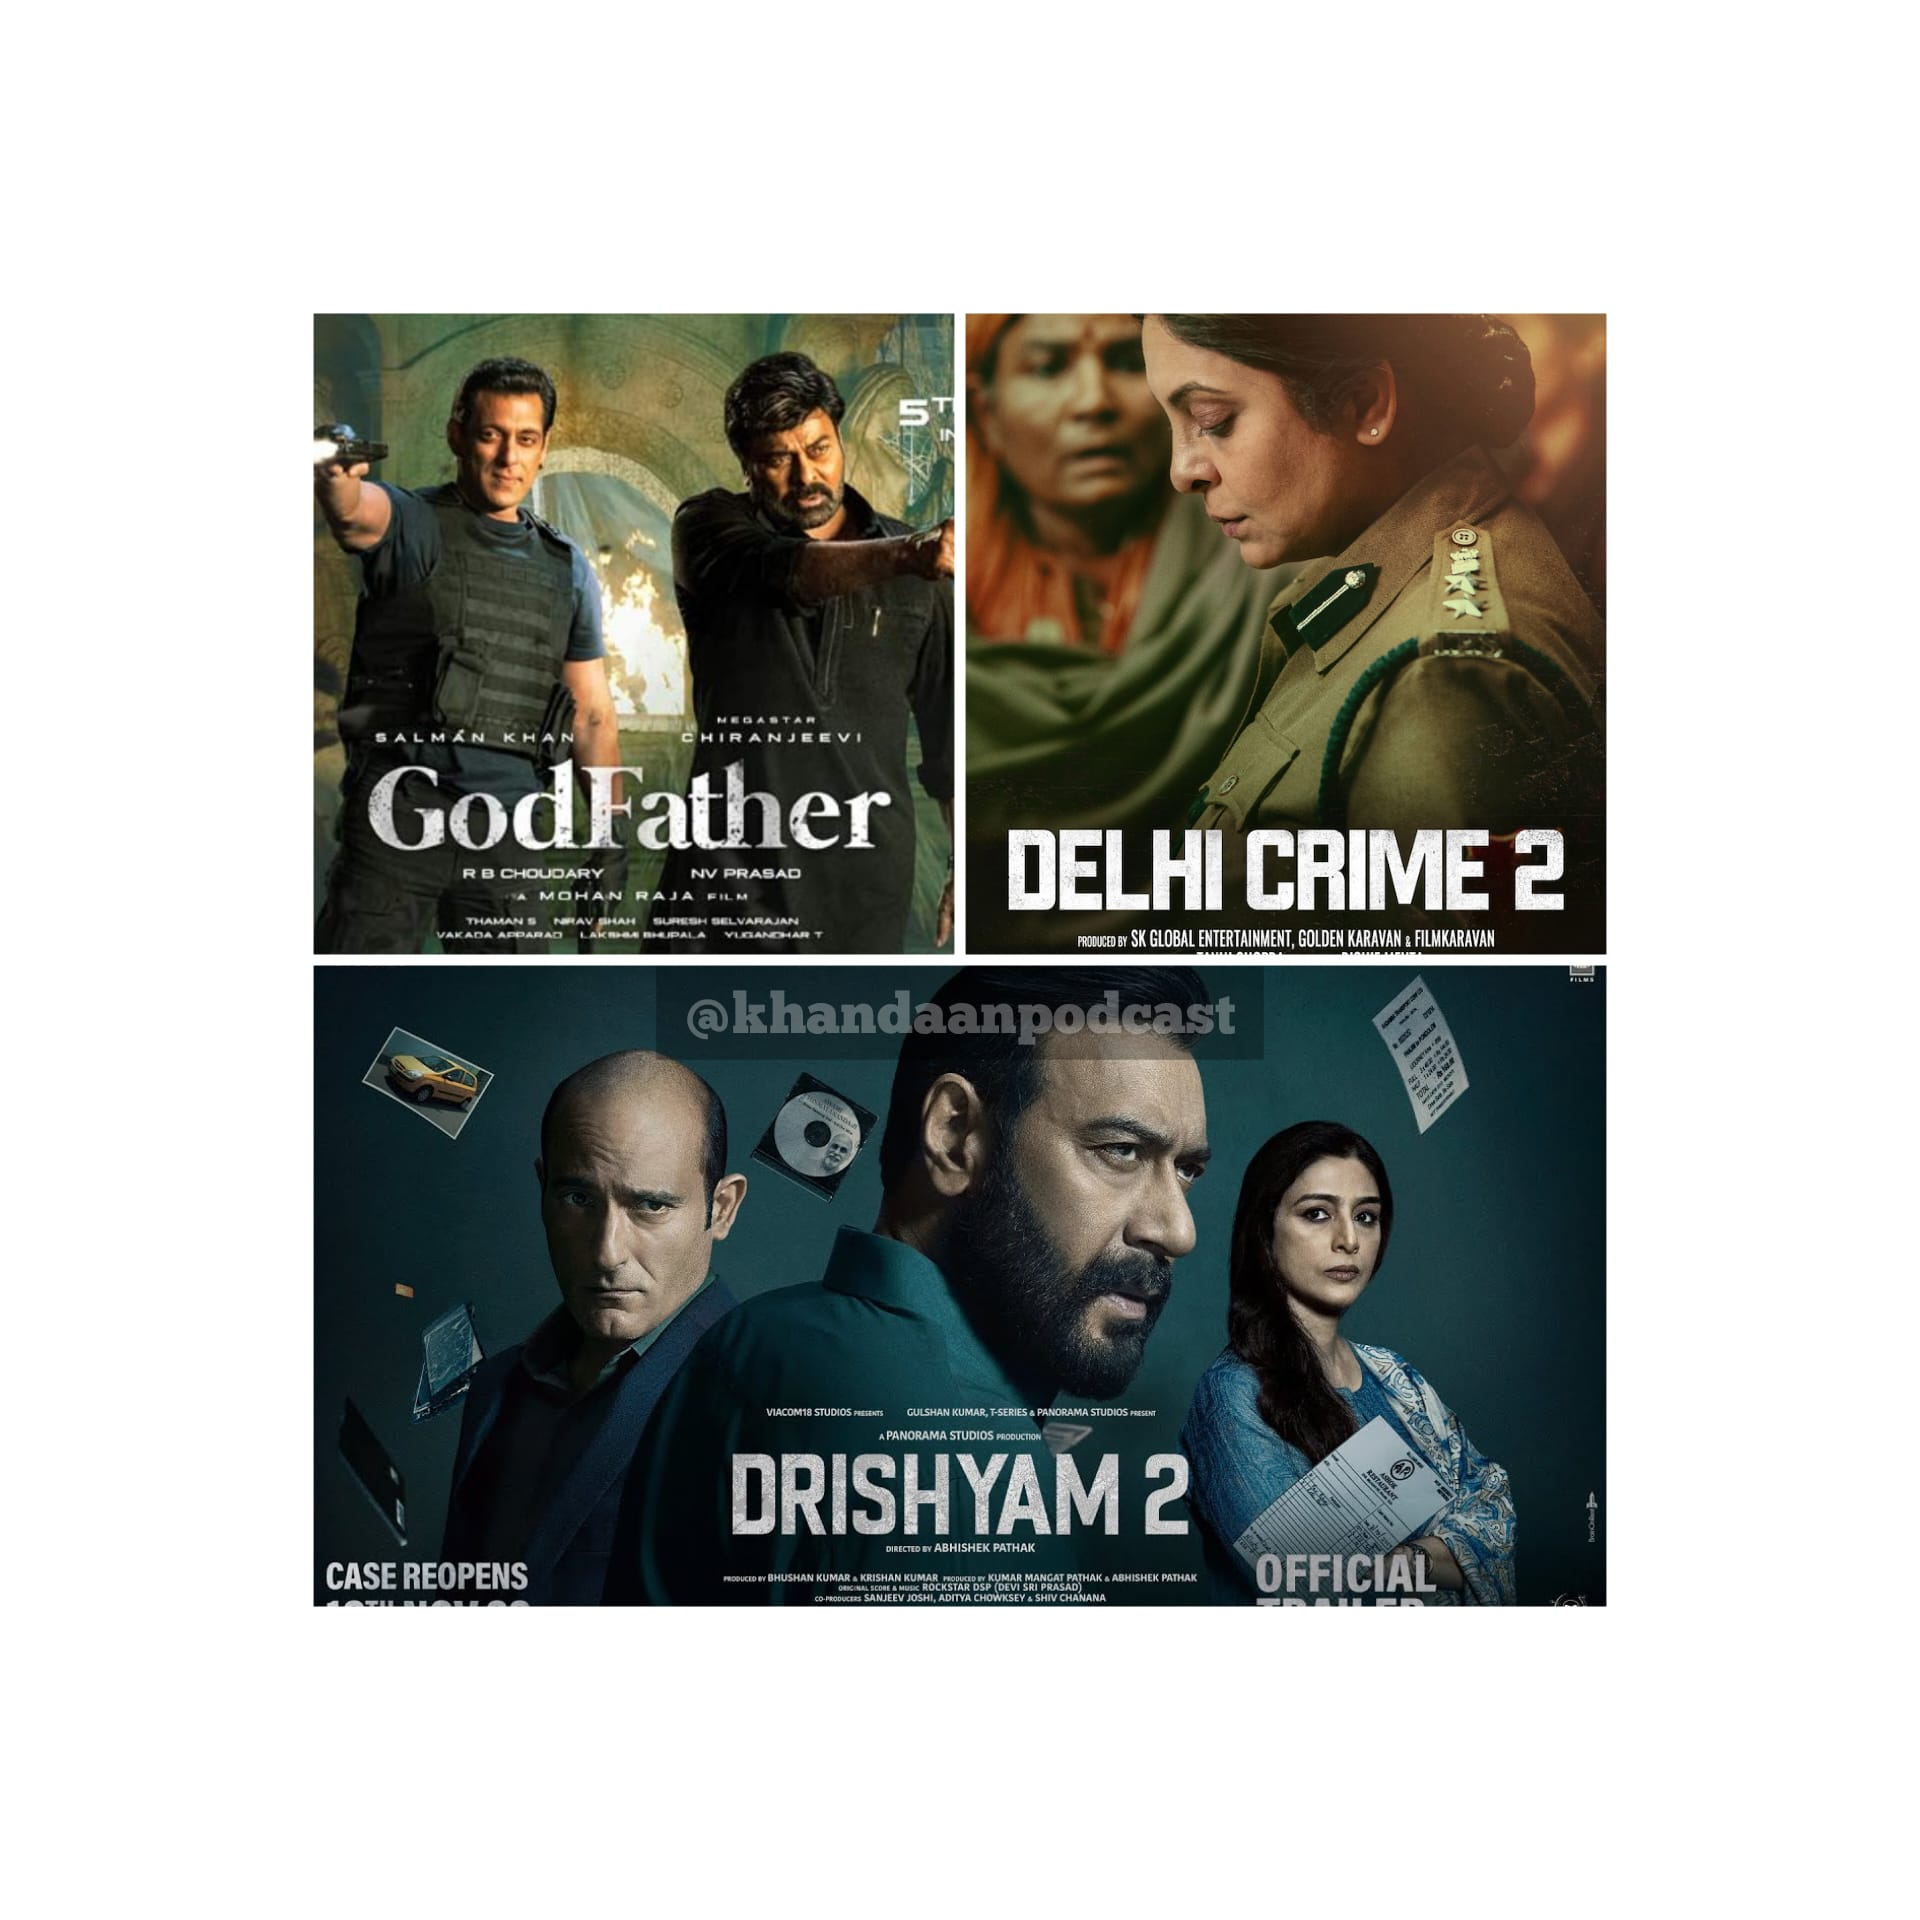 Ep 159- Delhi Crimes S2, Dhrishyam 2, Godfather Review